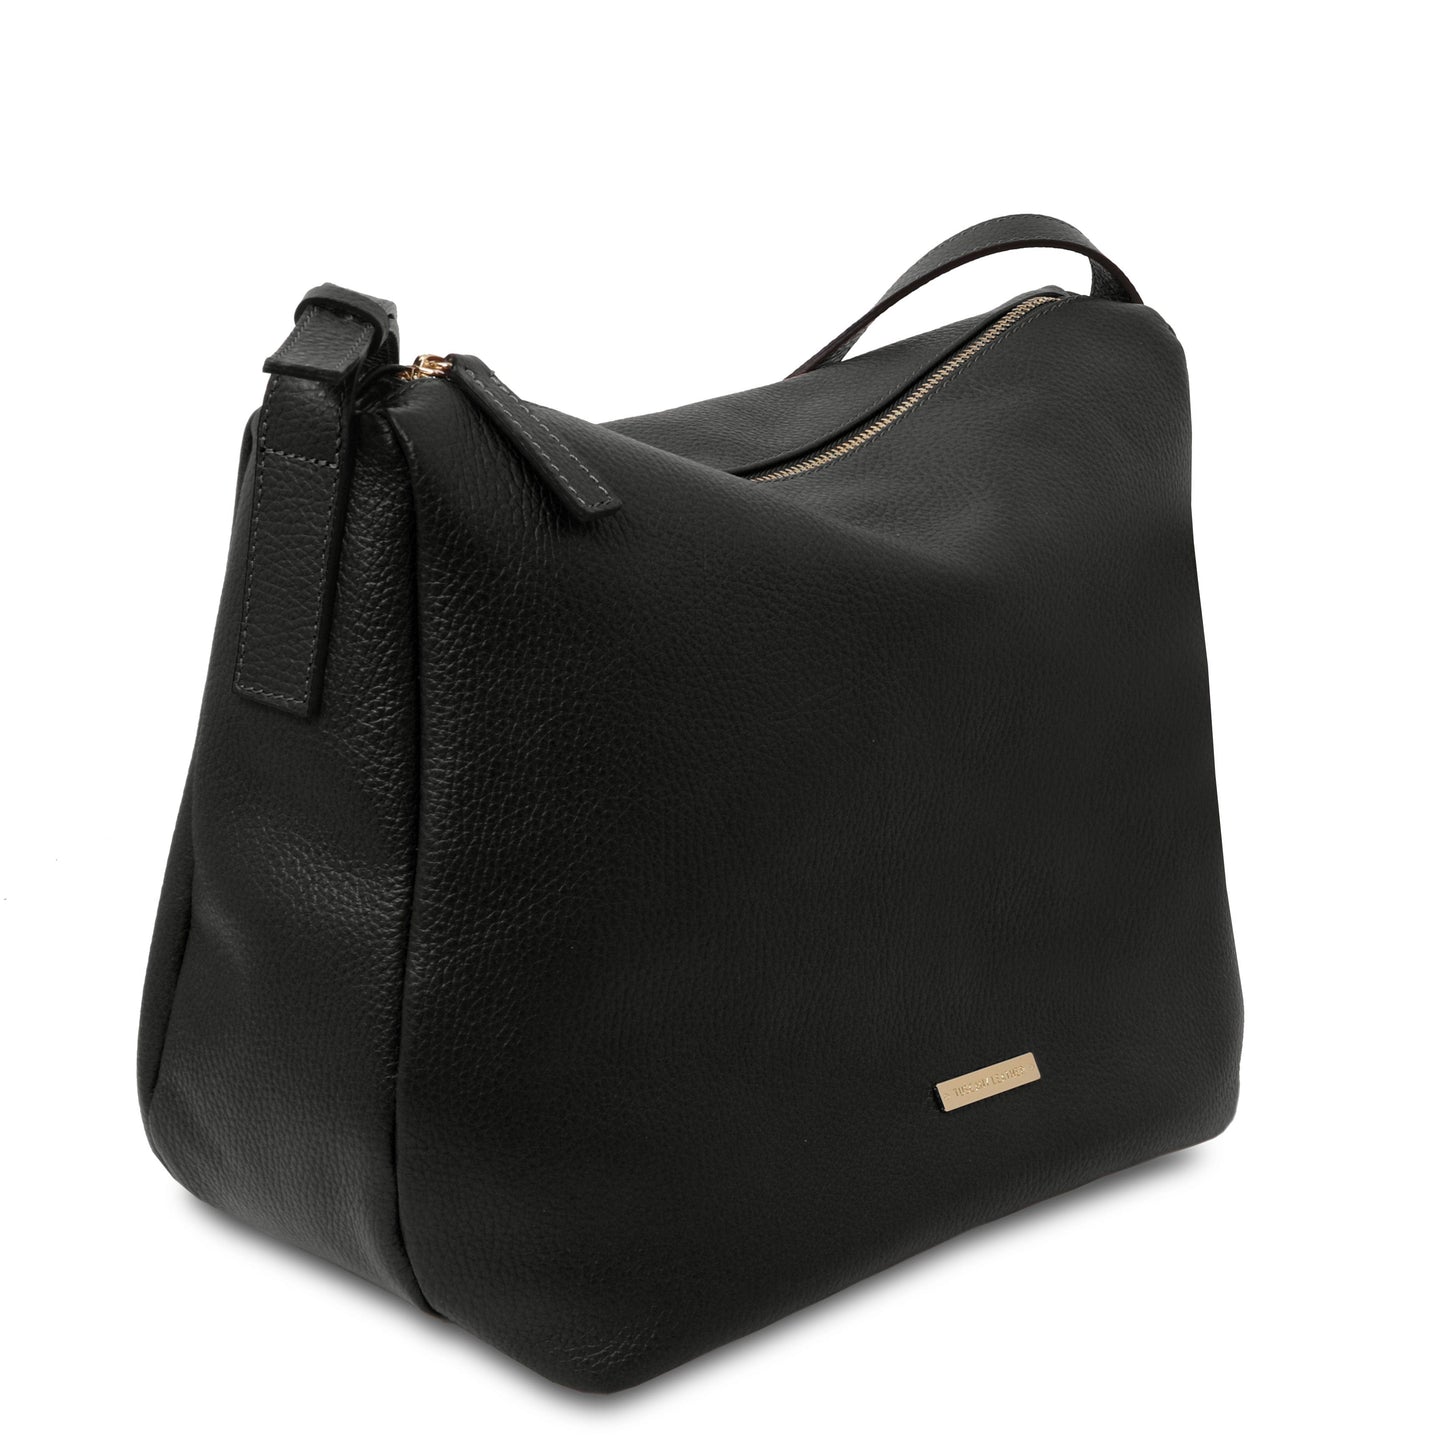 TL Bag - Soft leather hobo bag | TL142081 - Premium Leather shoulder bags - Shop now at San Rocco Italia